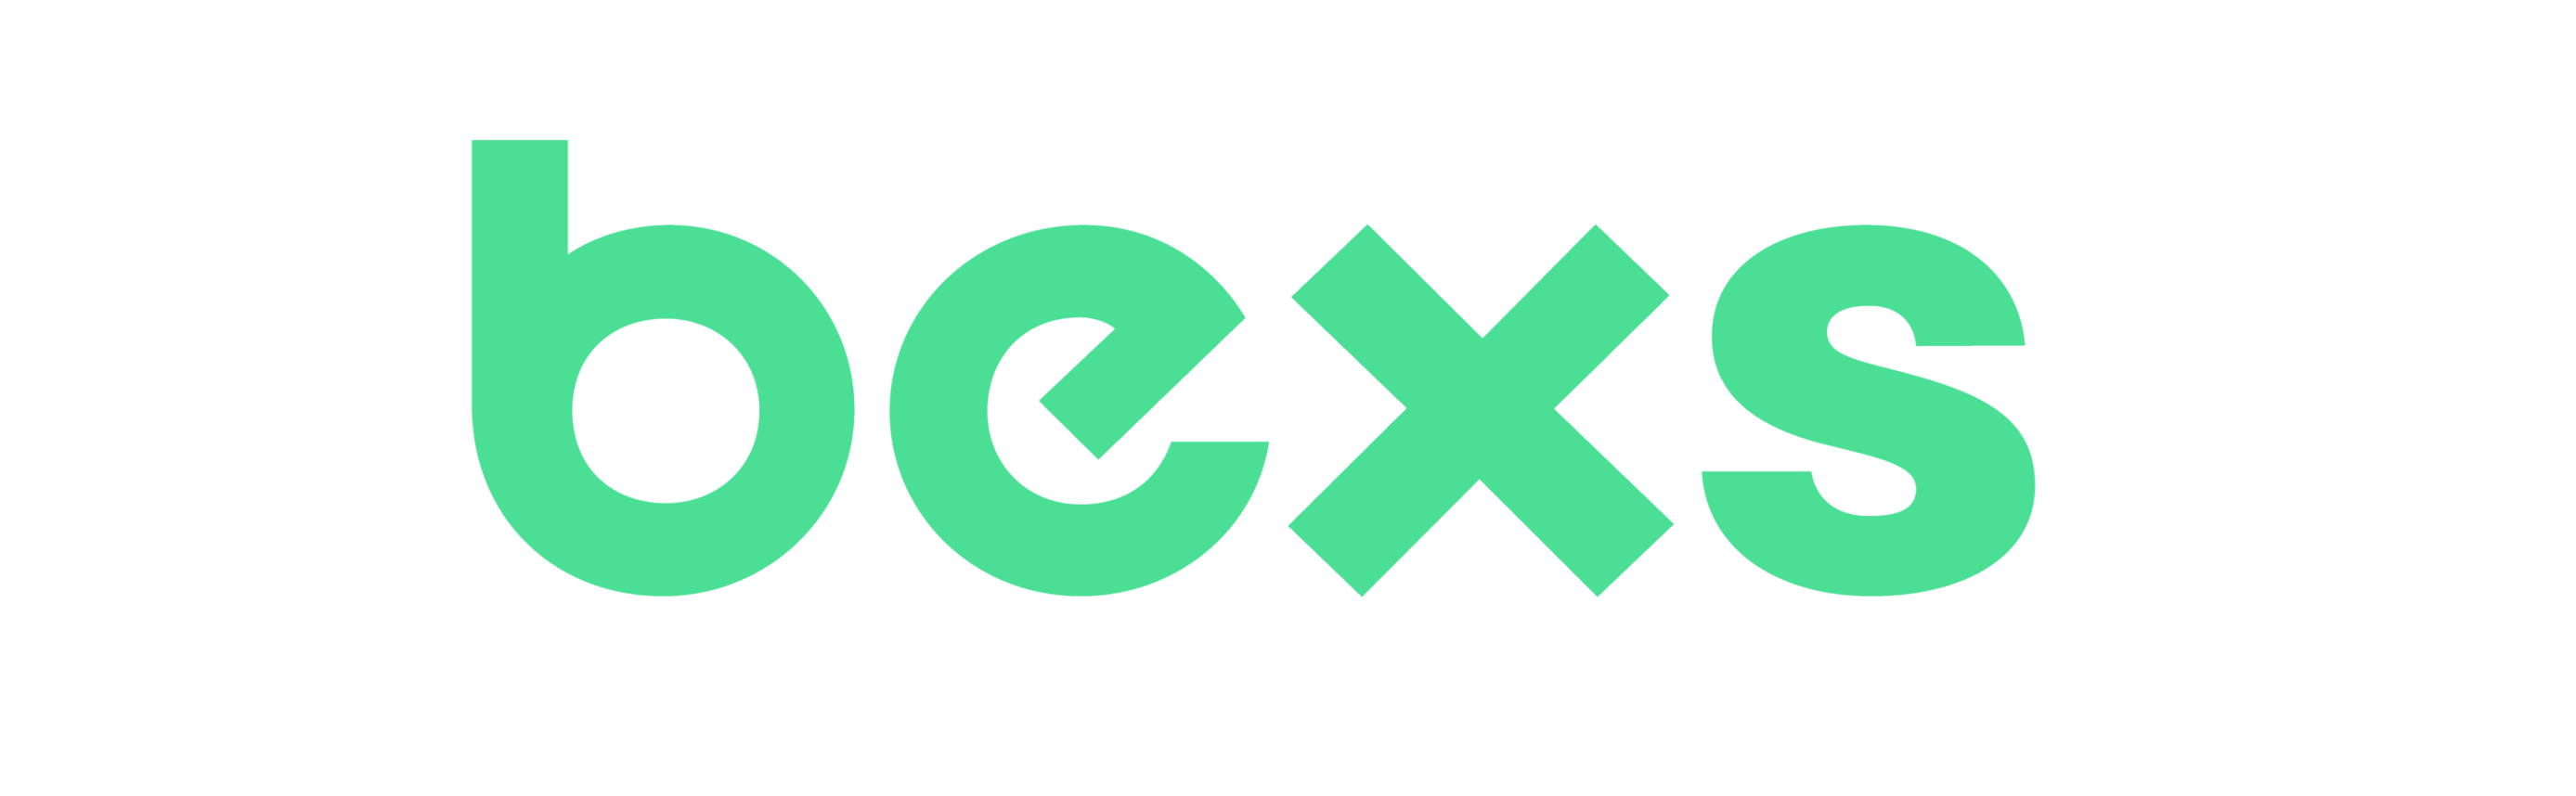 Logo Bexs Banco